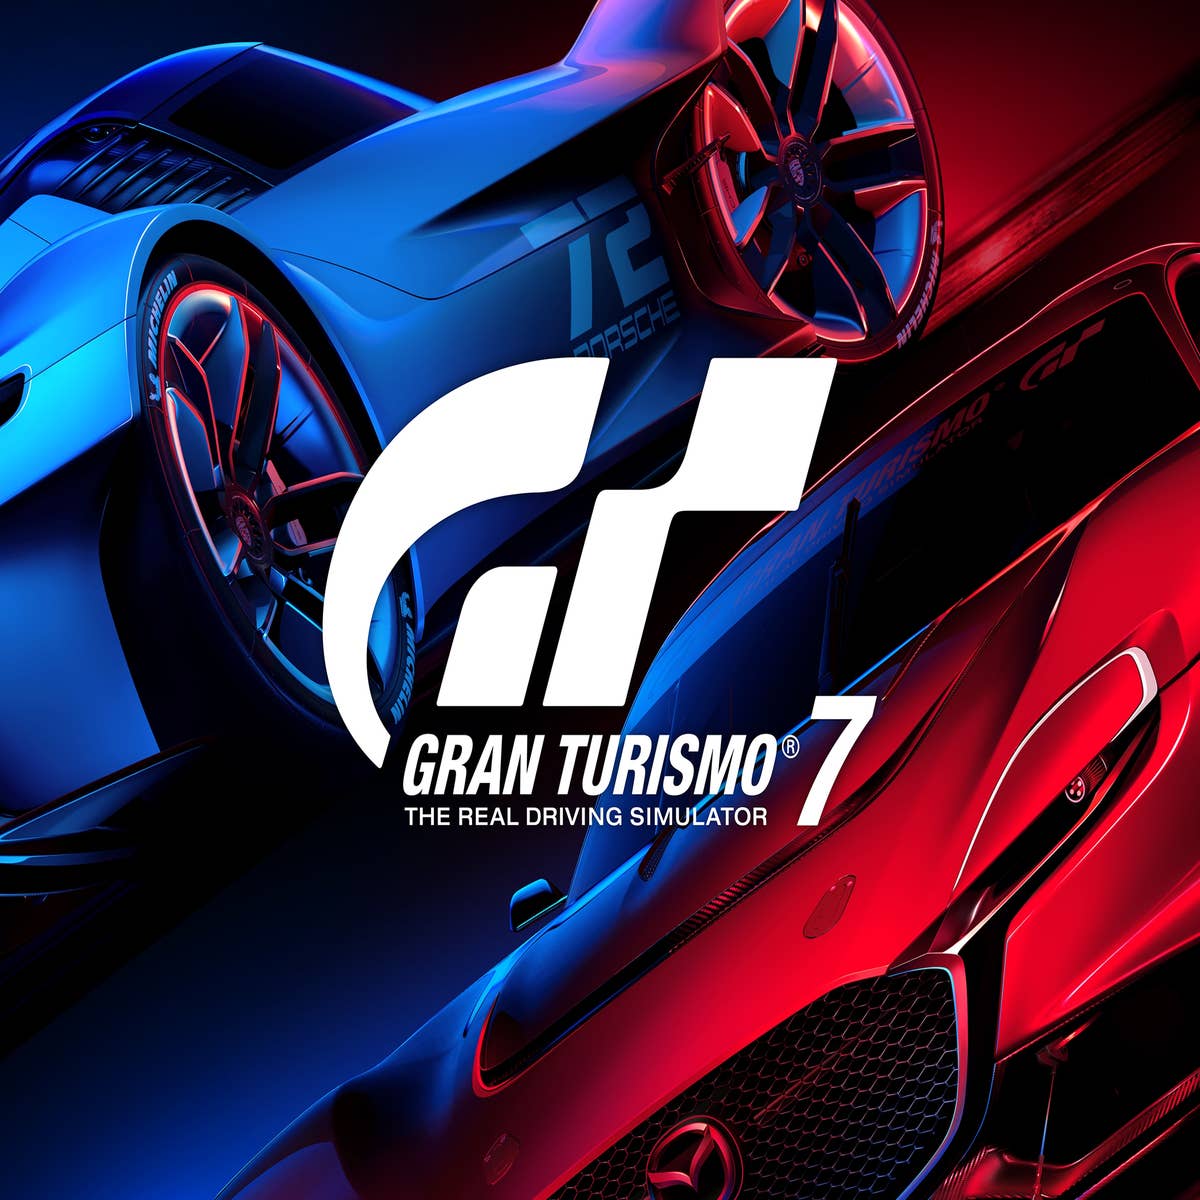 Gran Turismo 7 - PS5 (Mídia Física) - Nova Era Games e Informática